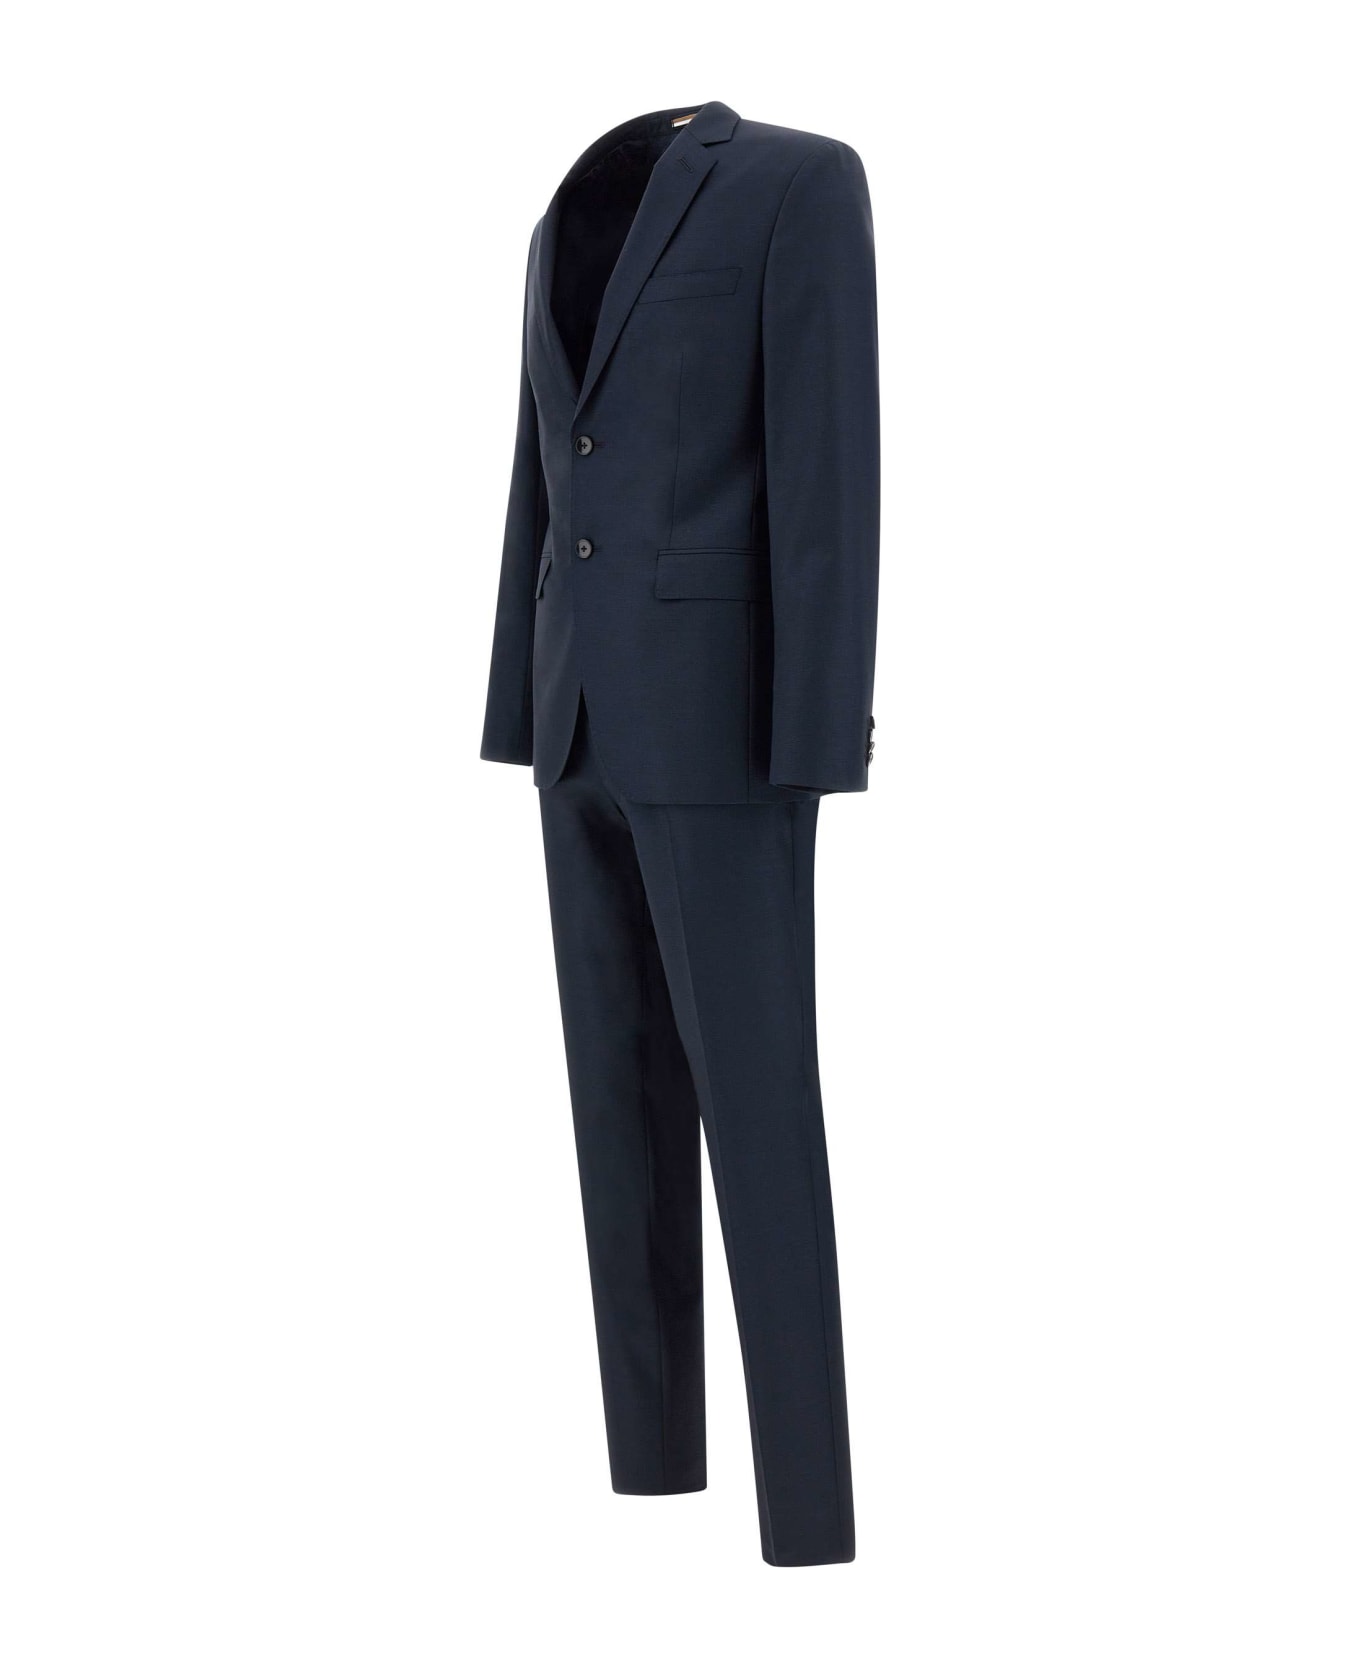 Hugo Boss "h-reymond" Suit - BLUE